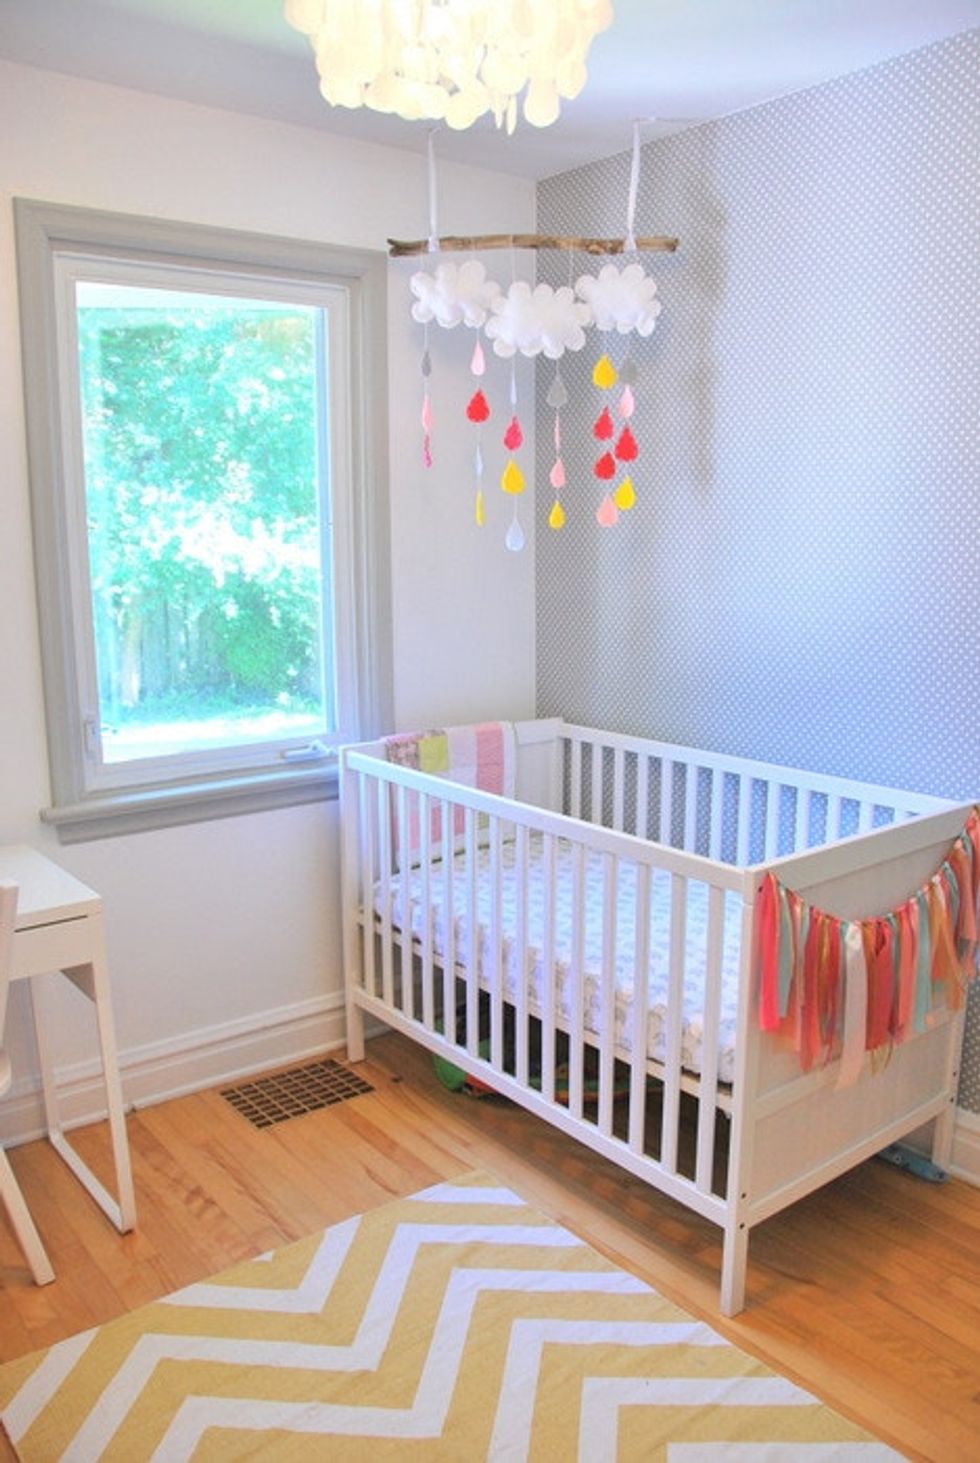 Do I need a nursery? 7 creative ways to make room for baby